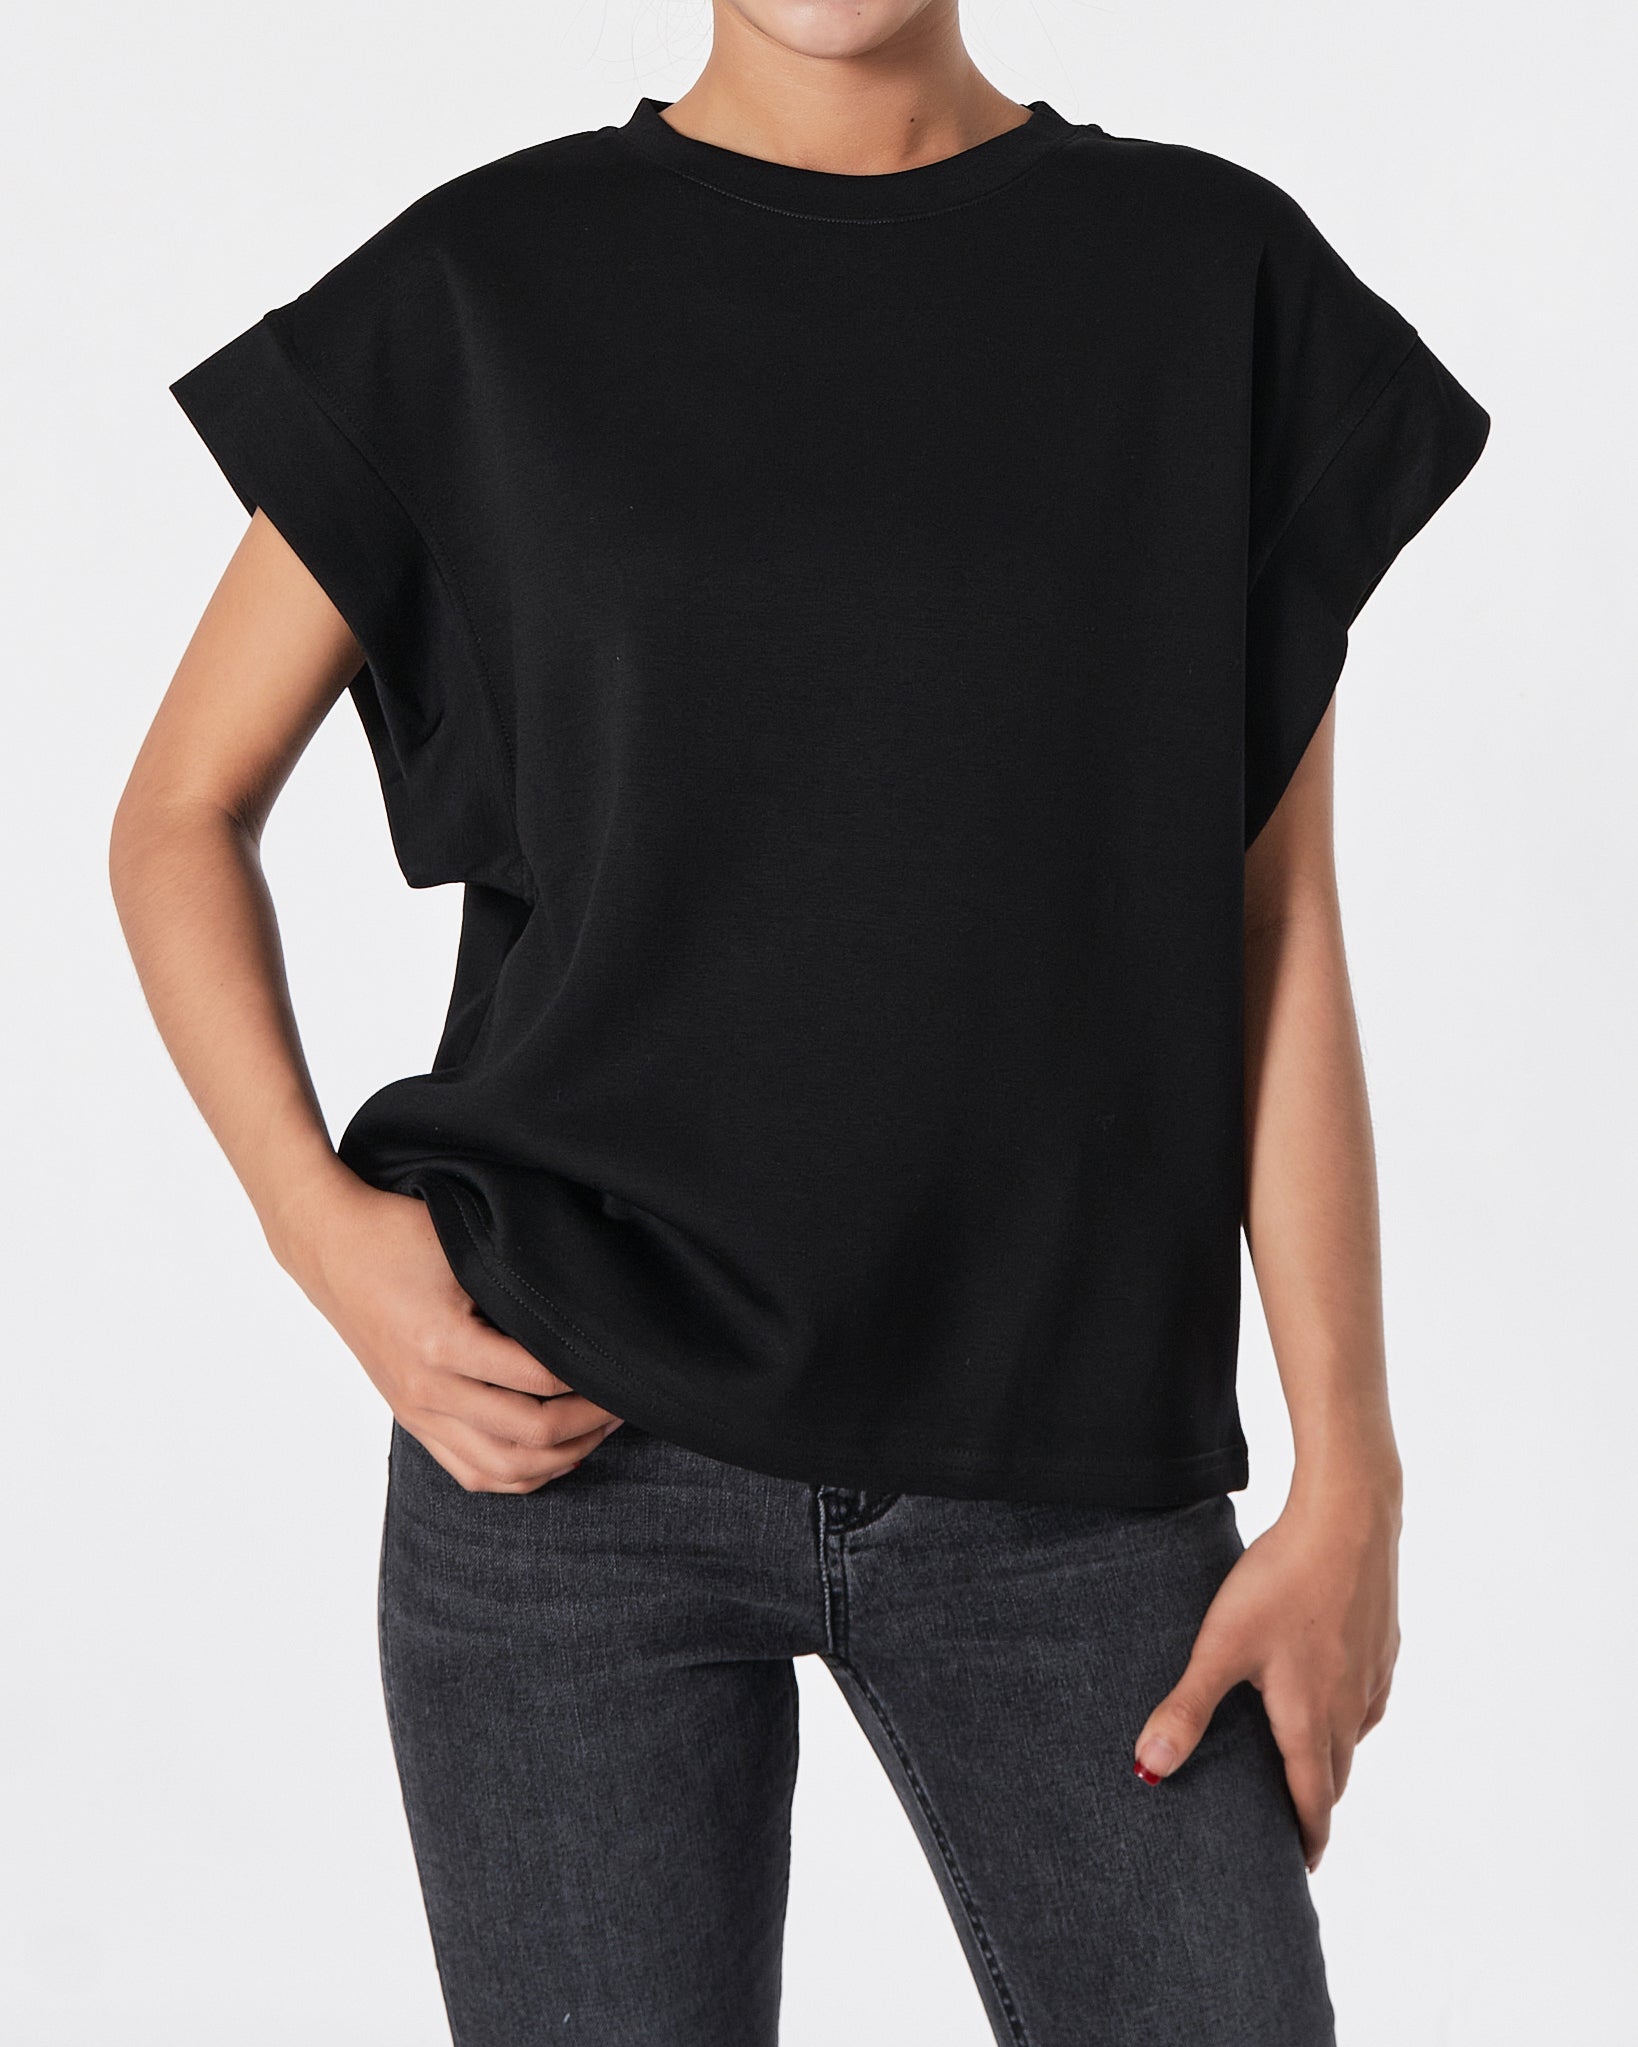 Lady Black  T-Shirt 13.90